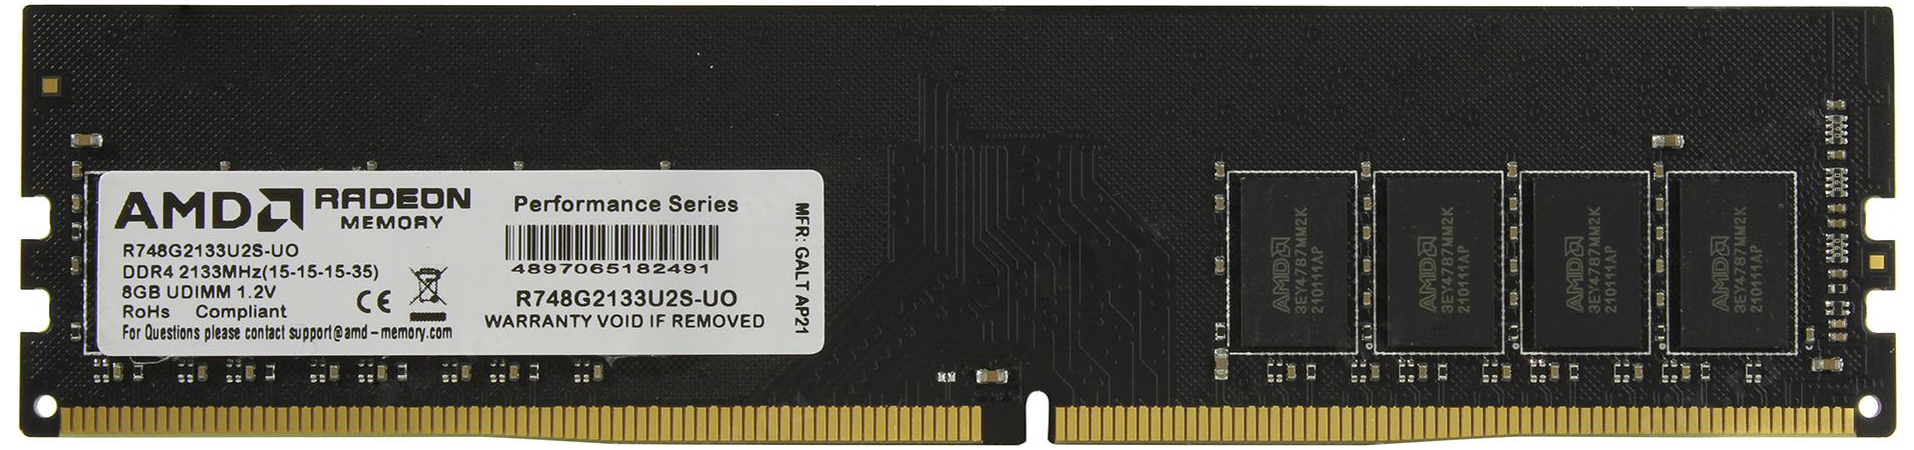 Оперативная память AMD Radeon R7 Performance Series (R748G2133U2S-UO) 8 ГБ